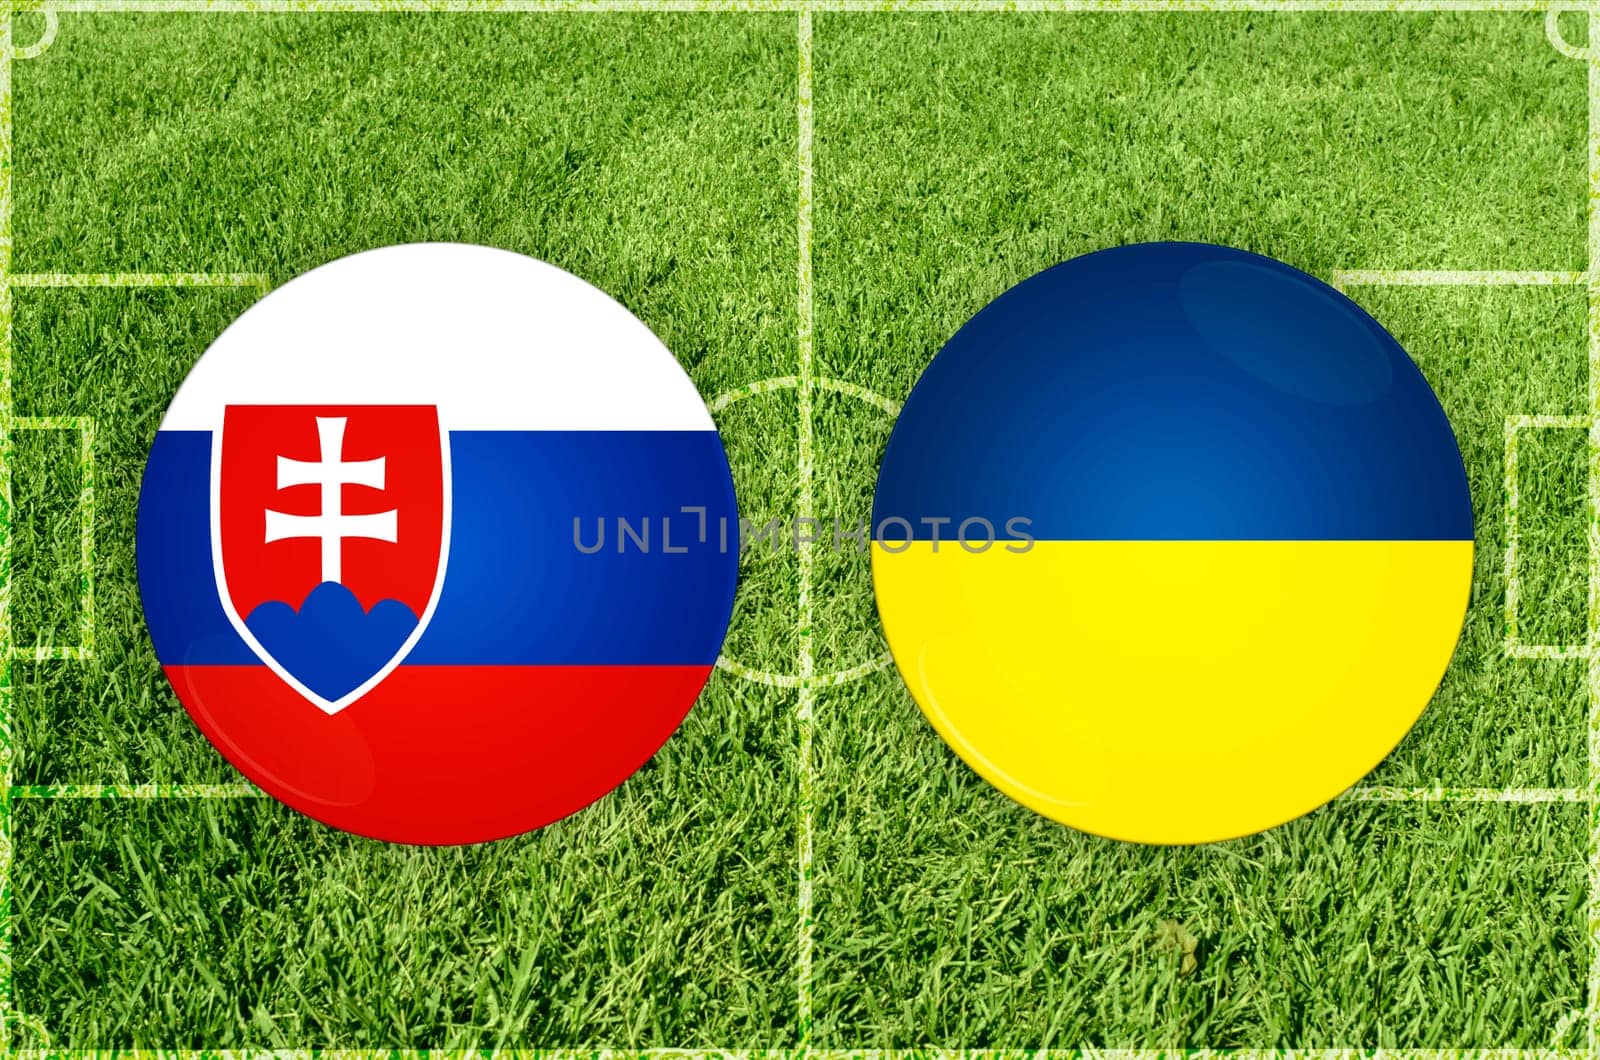 Slovakia vs Ukraine football match by rusak